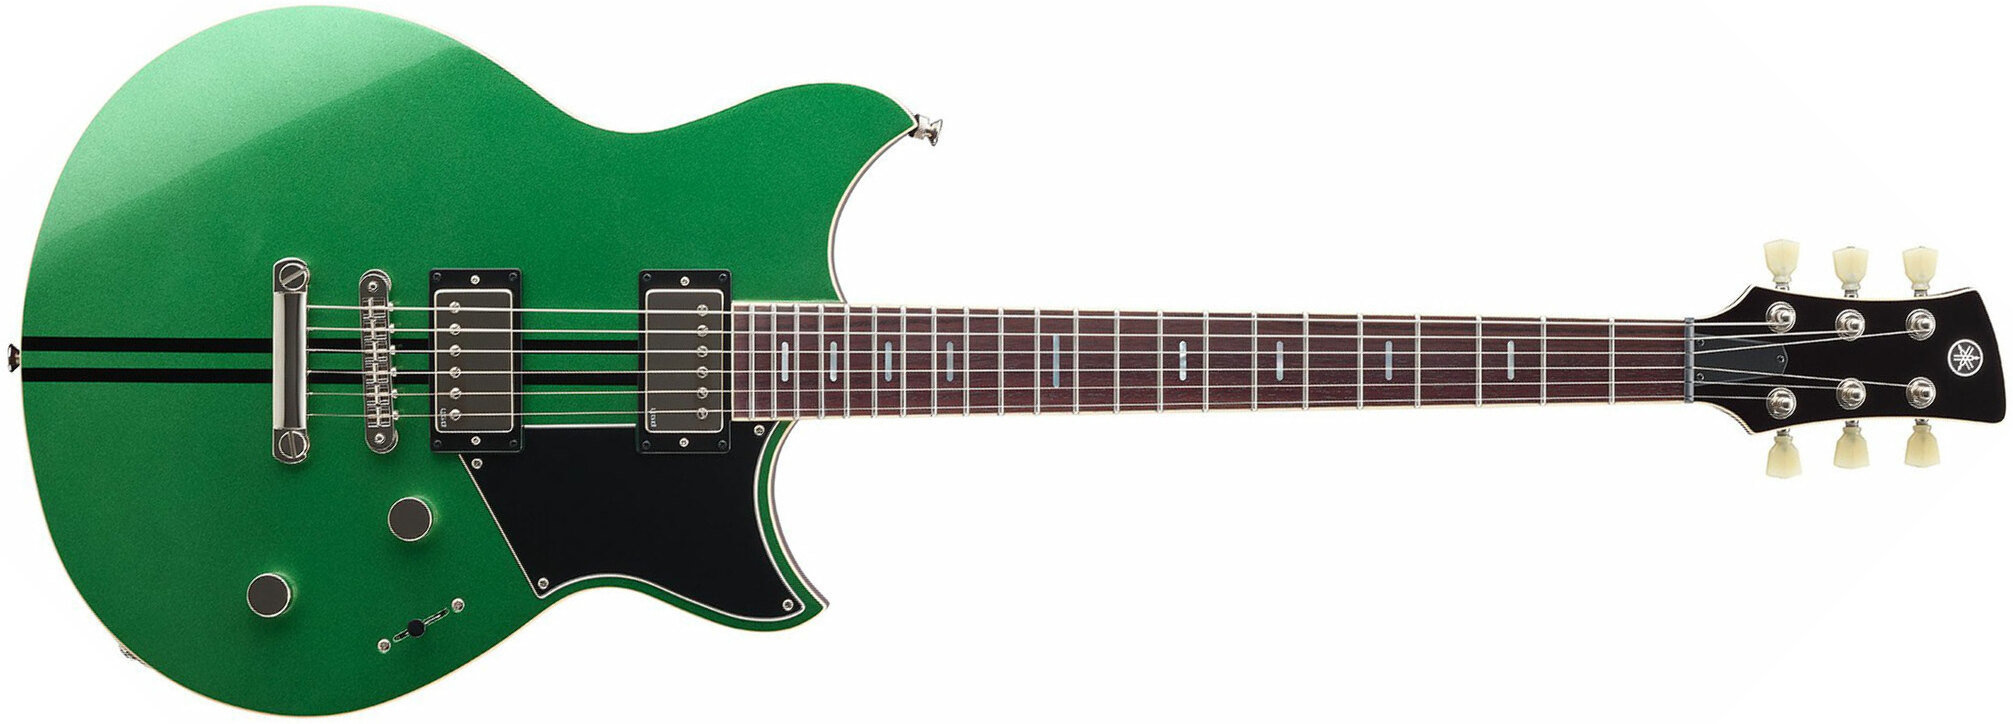 Yamaha Rss20 Revstar Standard Hh Ht Rw - Flash Green - Double cut electric guitar - Main picture